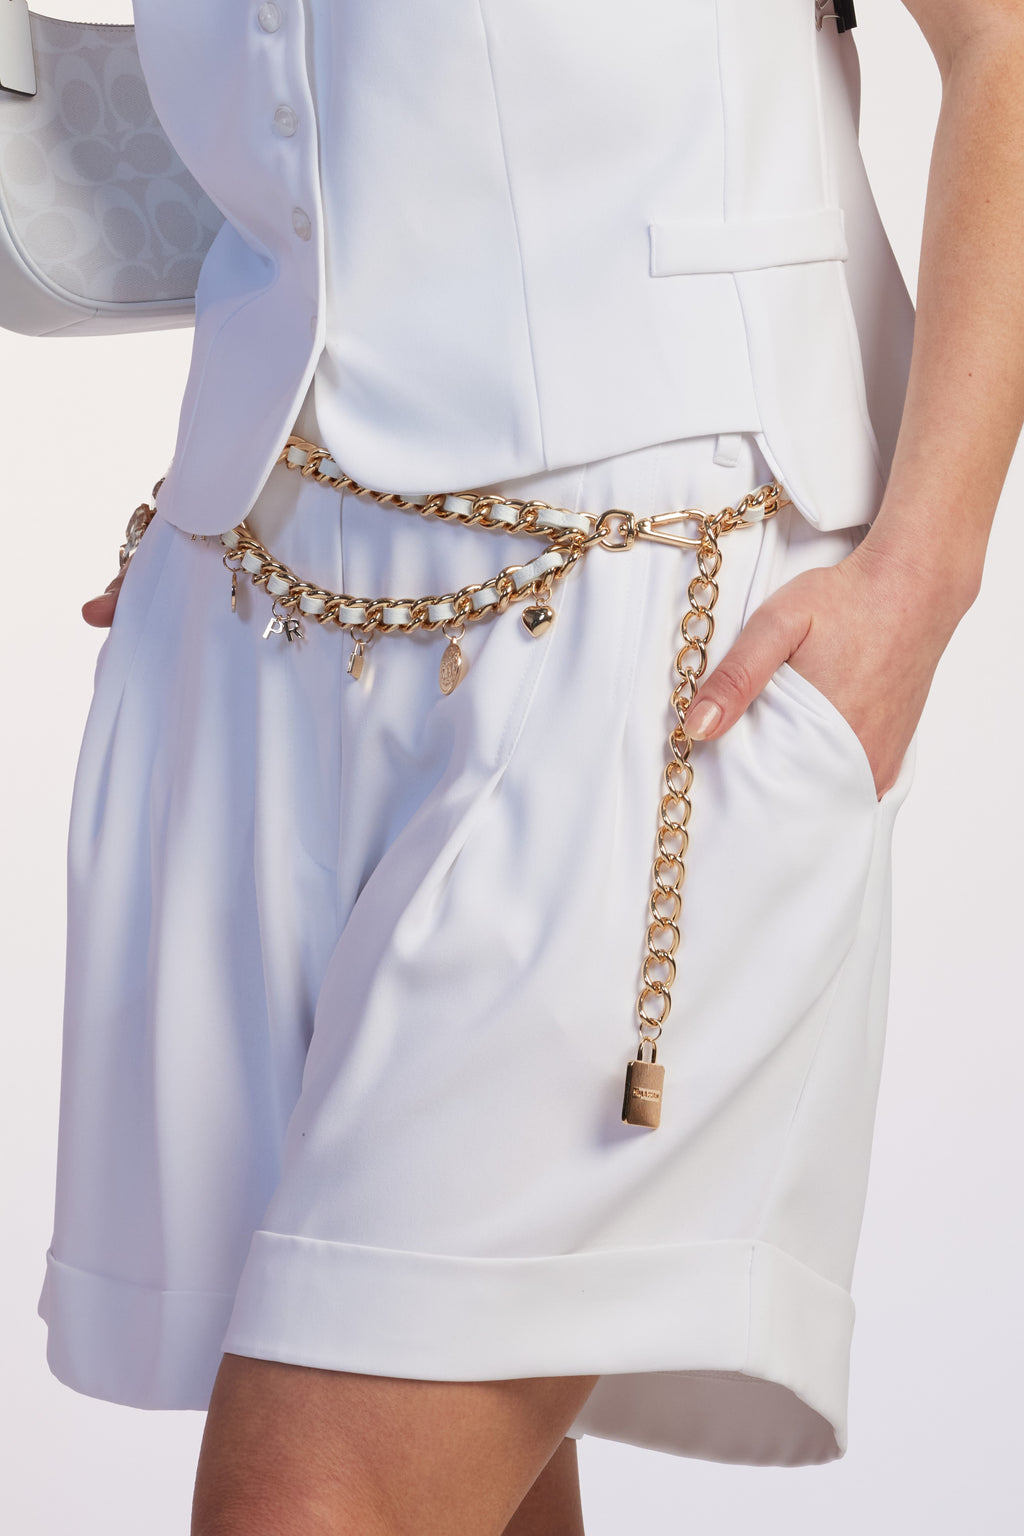 PAULA RYAN Leather Chain Charm Belt - White/Gold - Paula Ryan